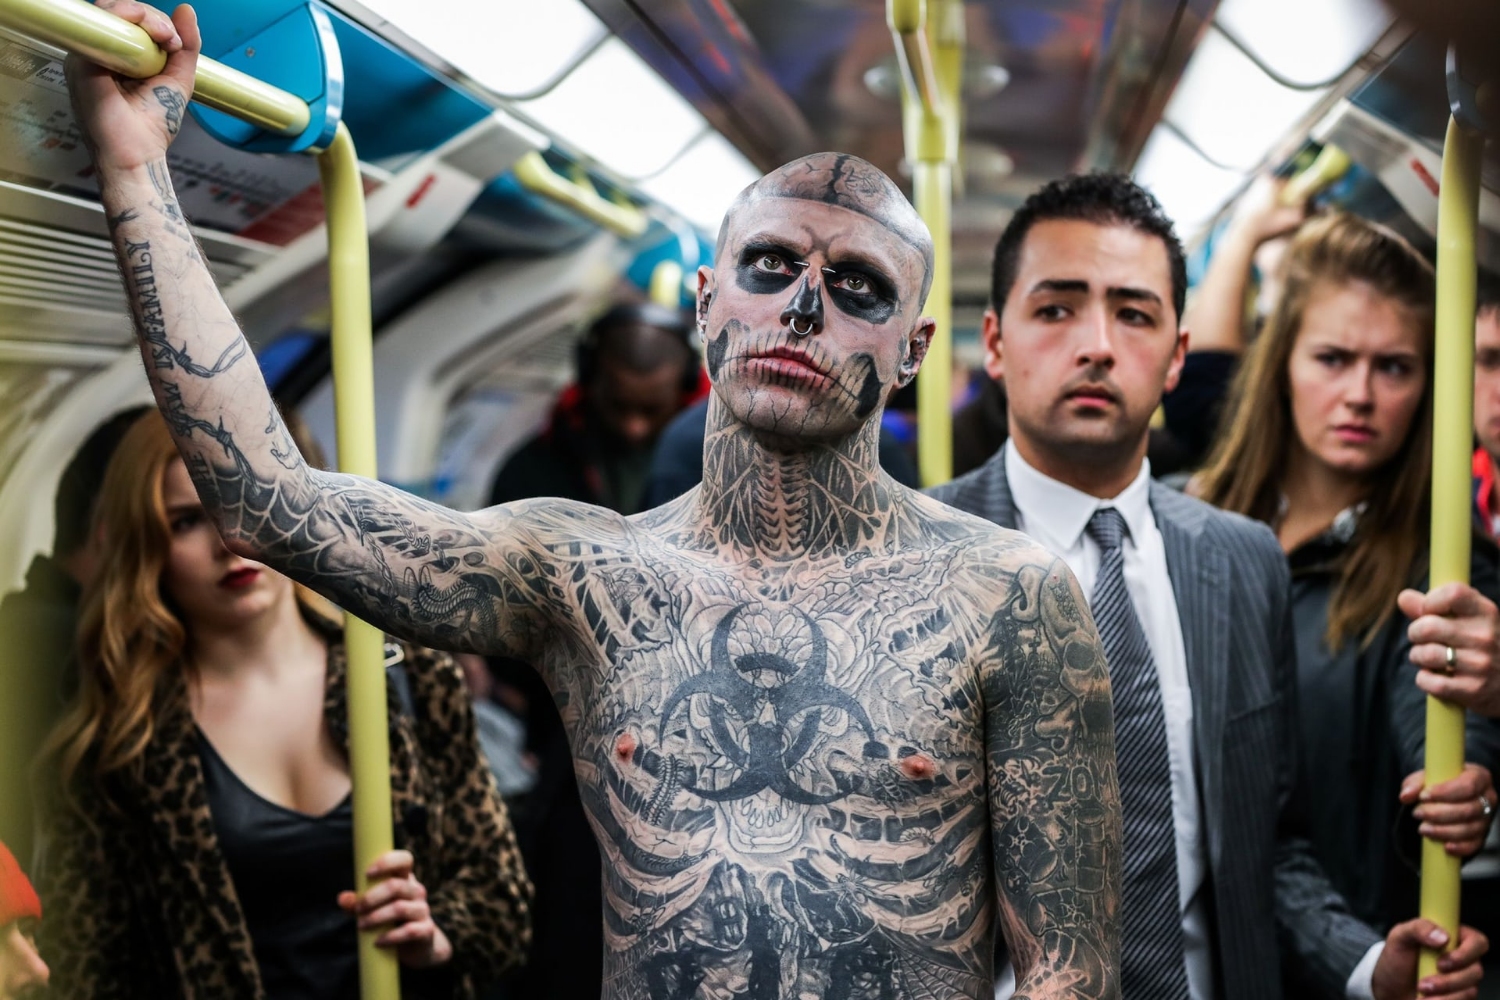  Zombie Boy in London in 2016. Photograph: CPG Photography Ltd/Rex/Shutterstock